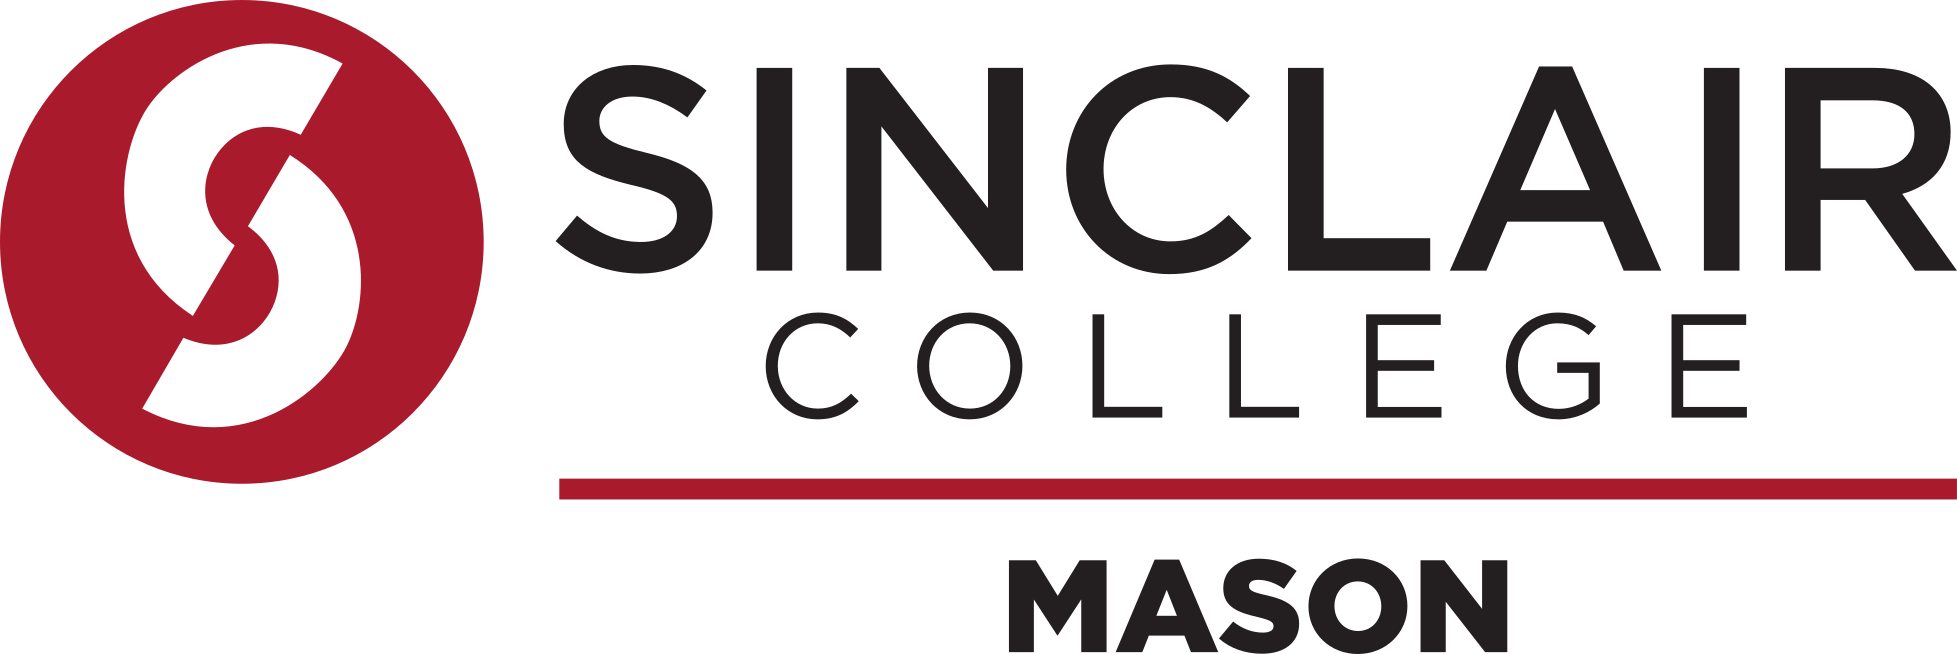 Sinclair College in Mason logo